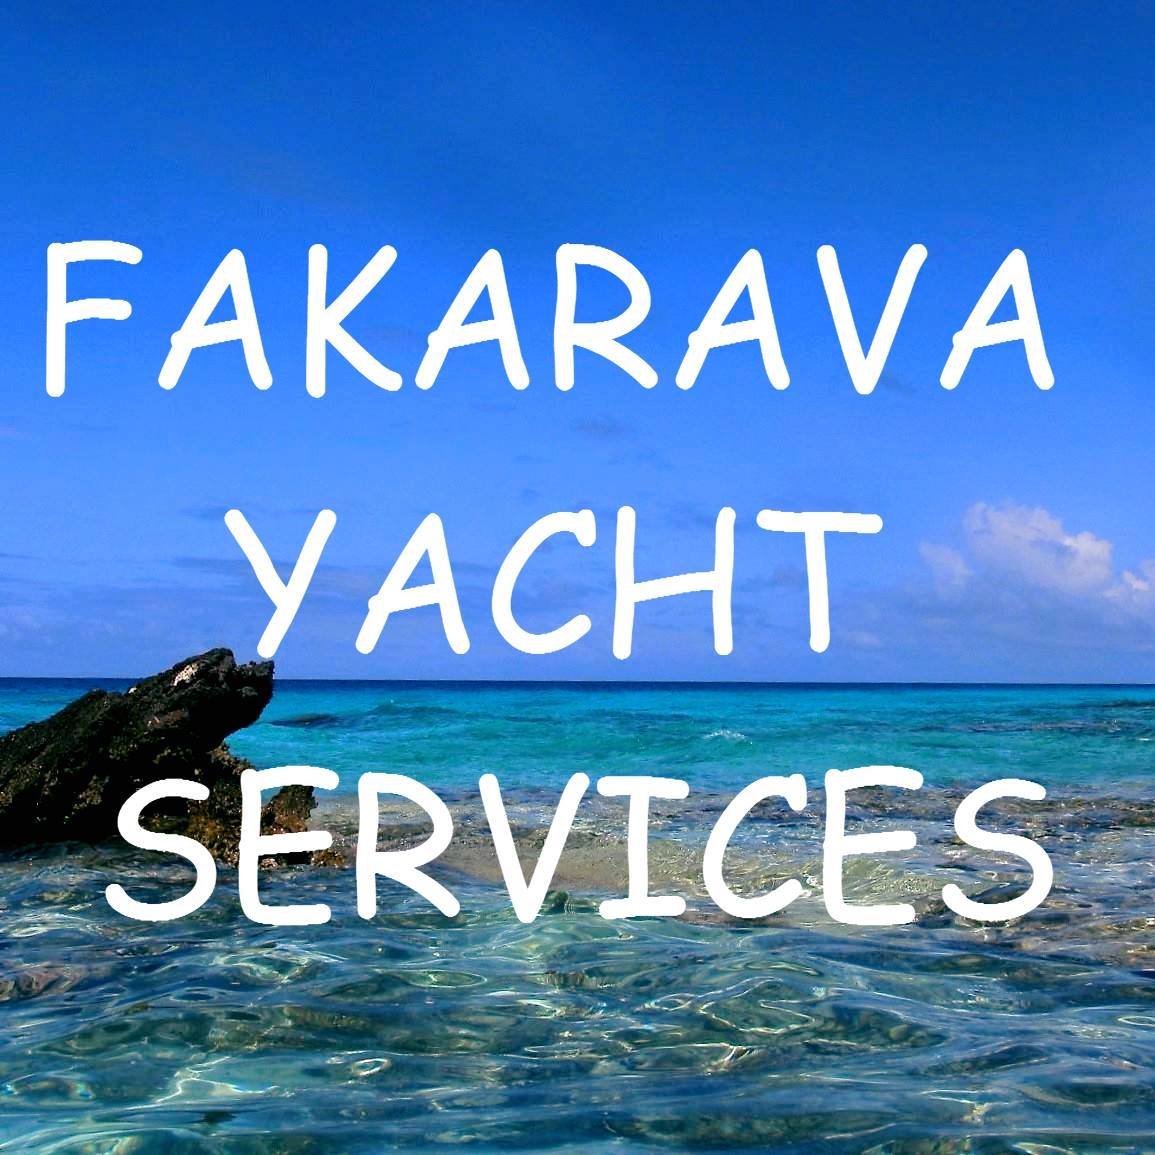 fakarava yacht services